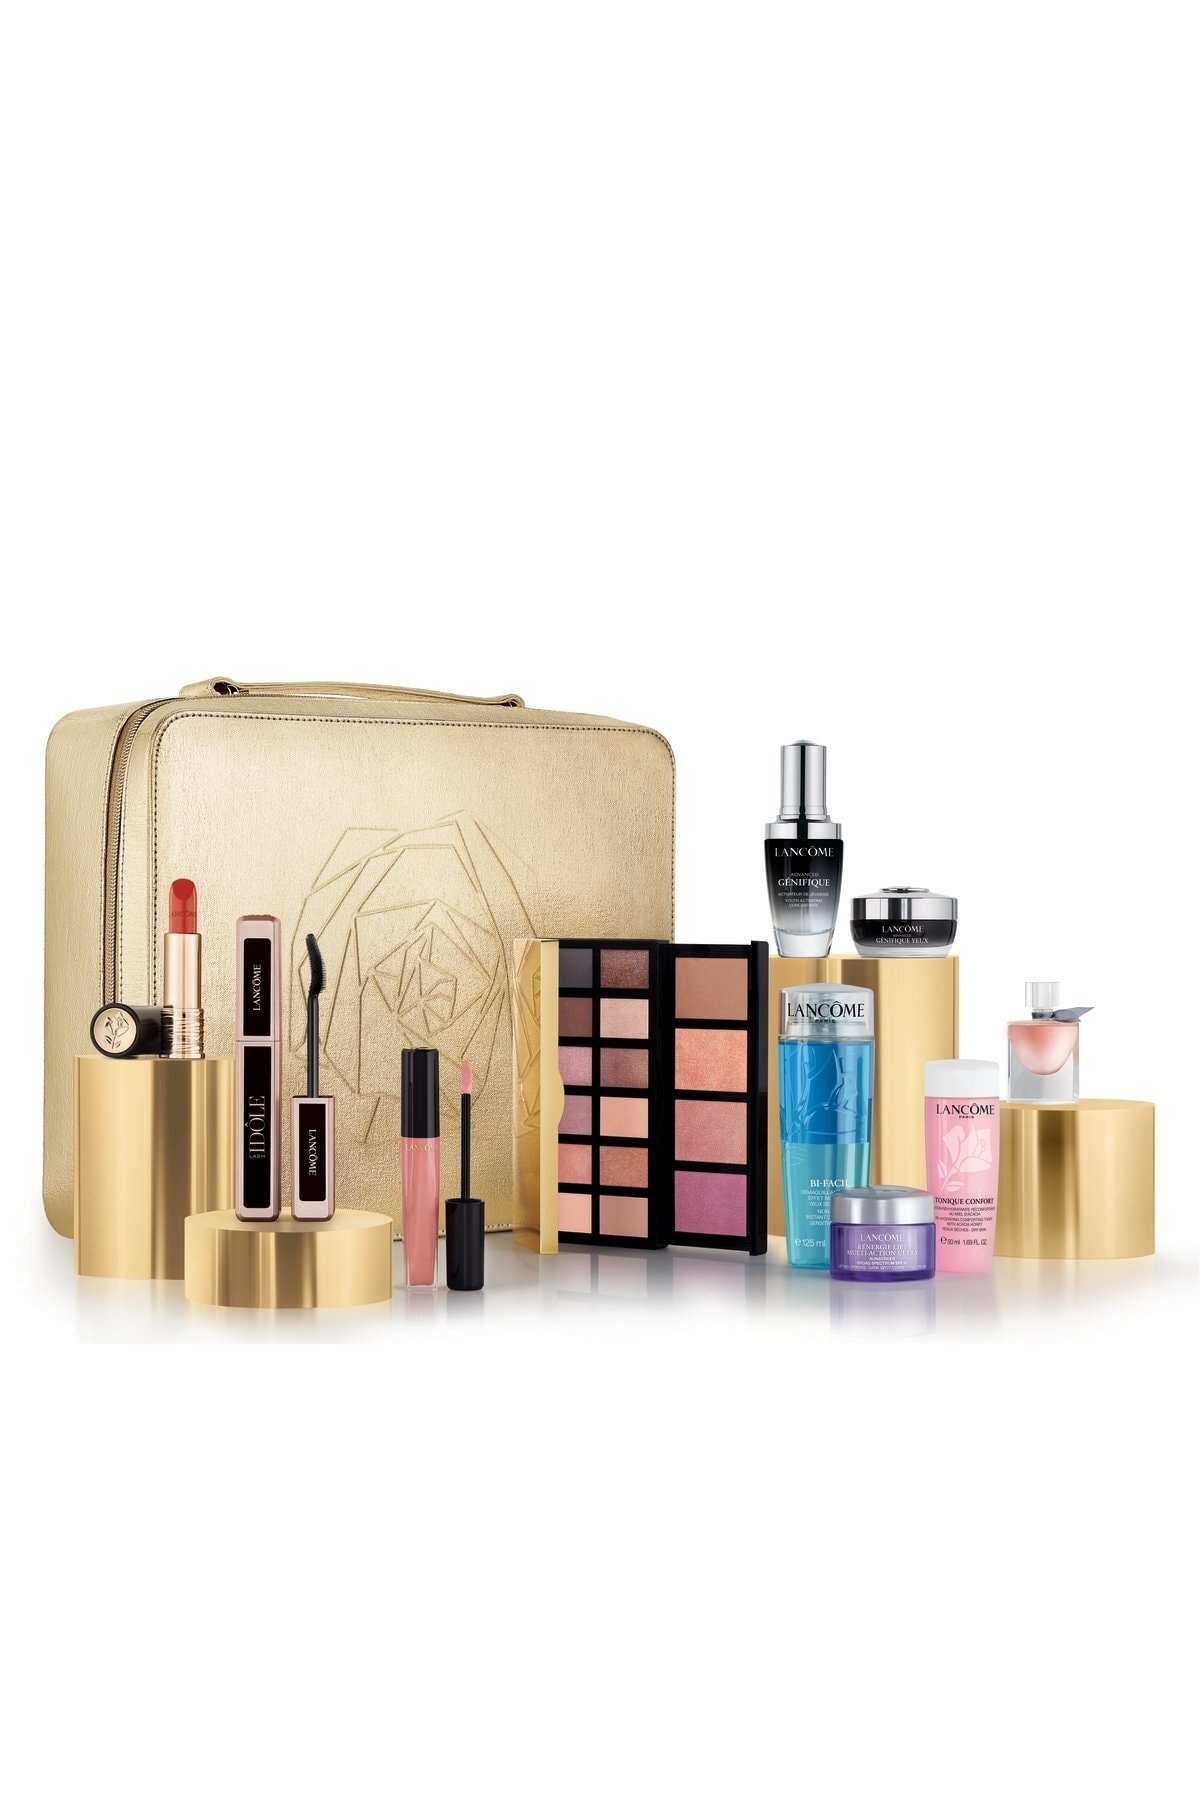 Lancome Beauty Box Limited Edition Set 3614273884112